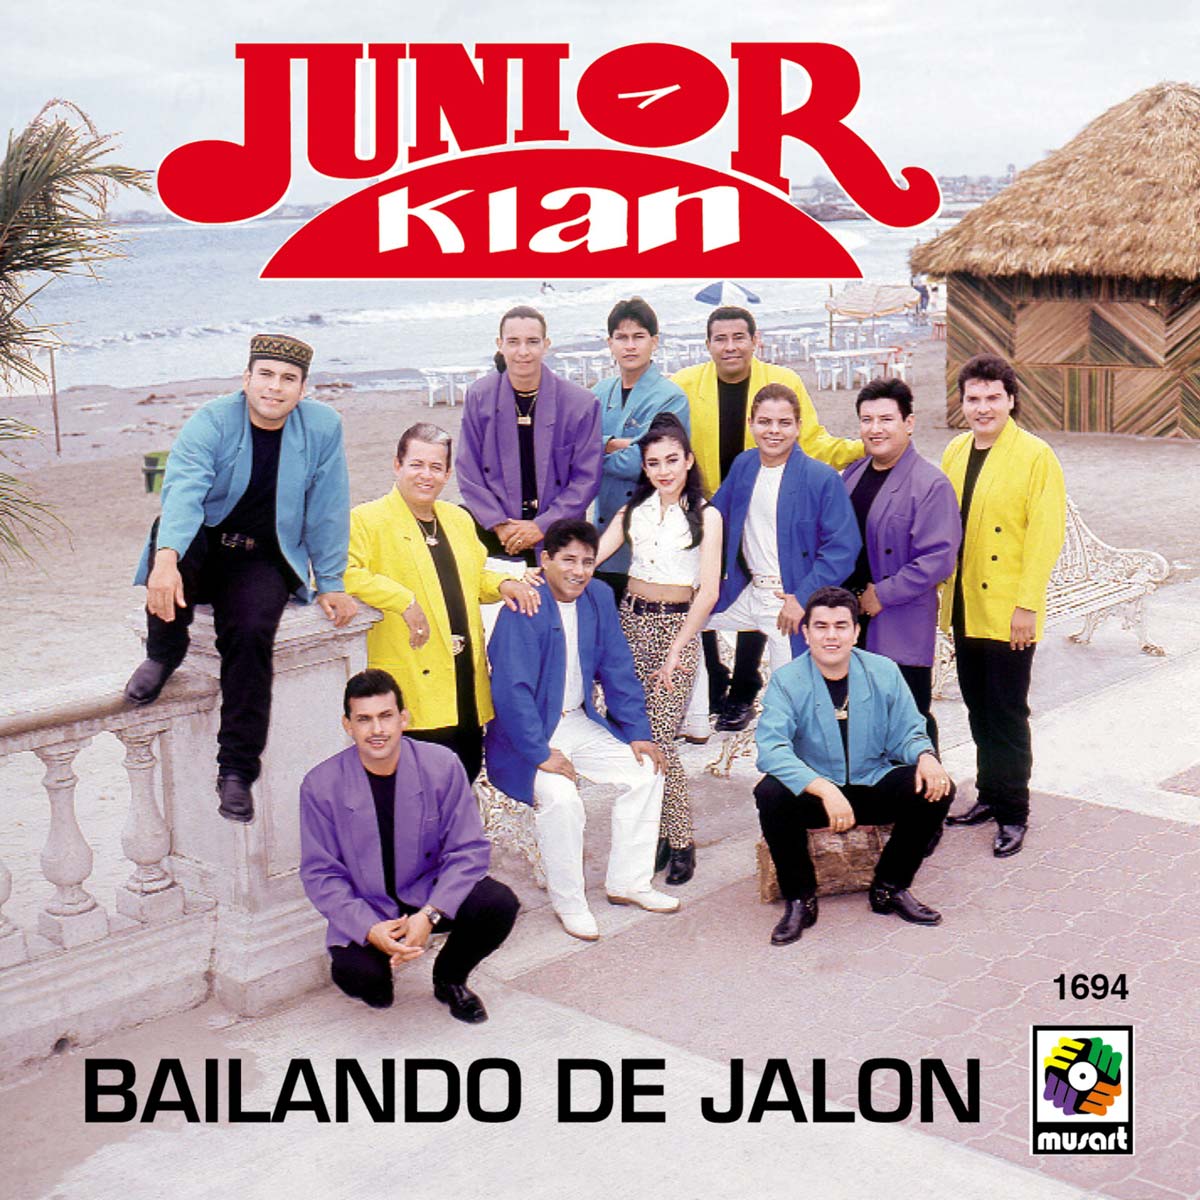 Featured Image for “Bailando De Jalón”